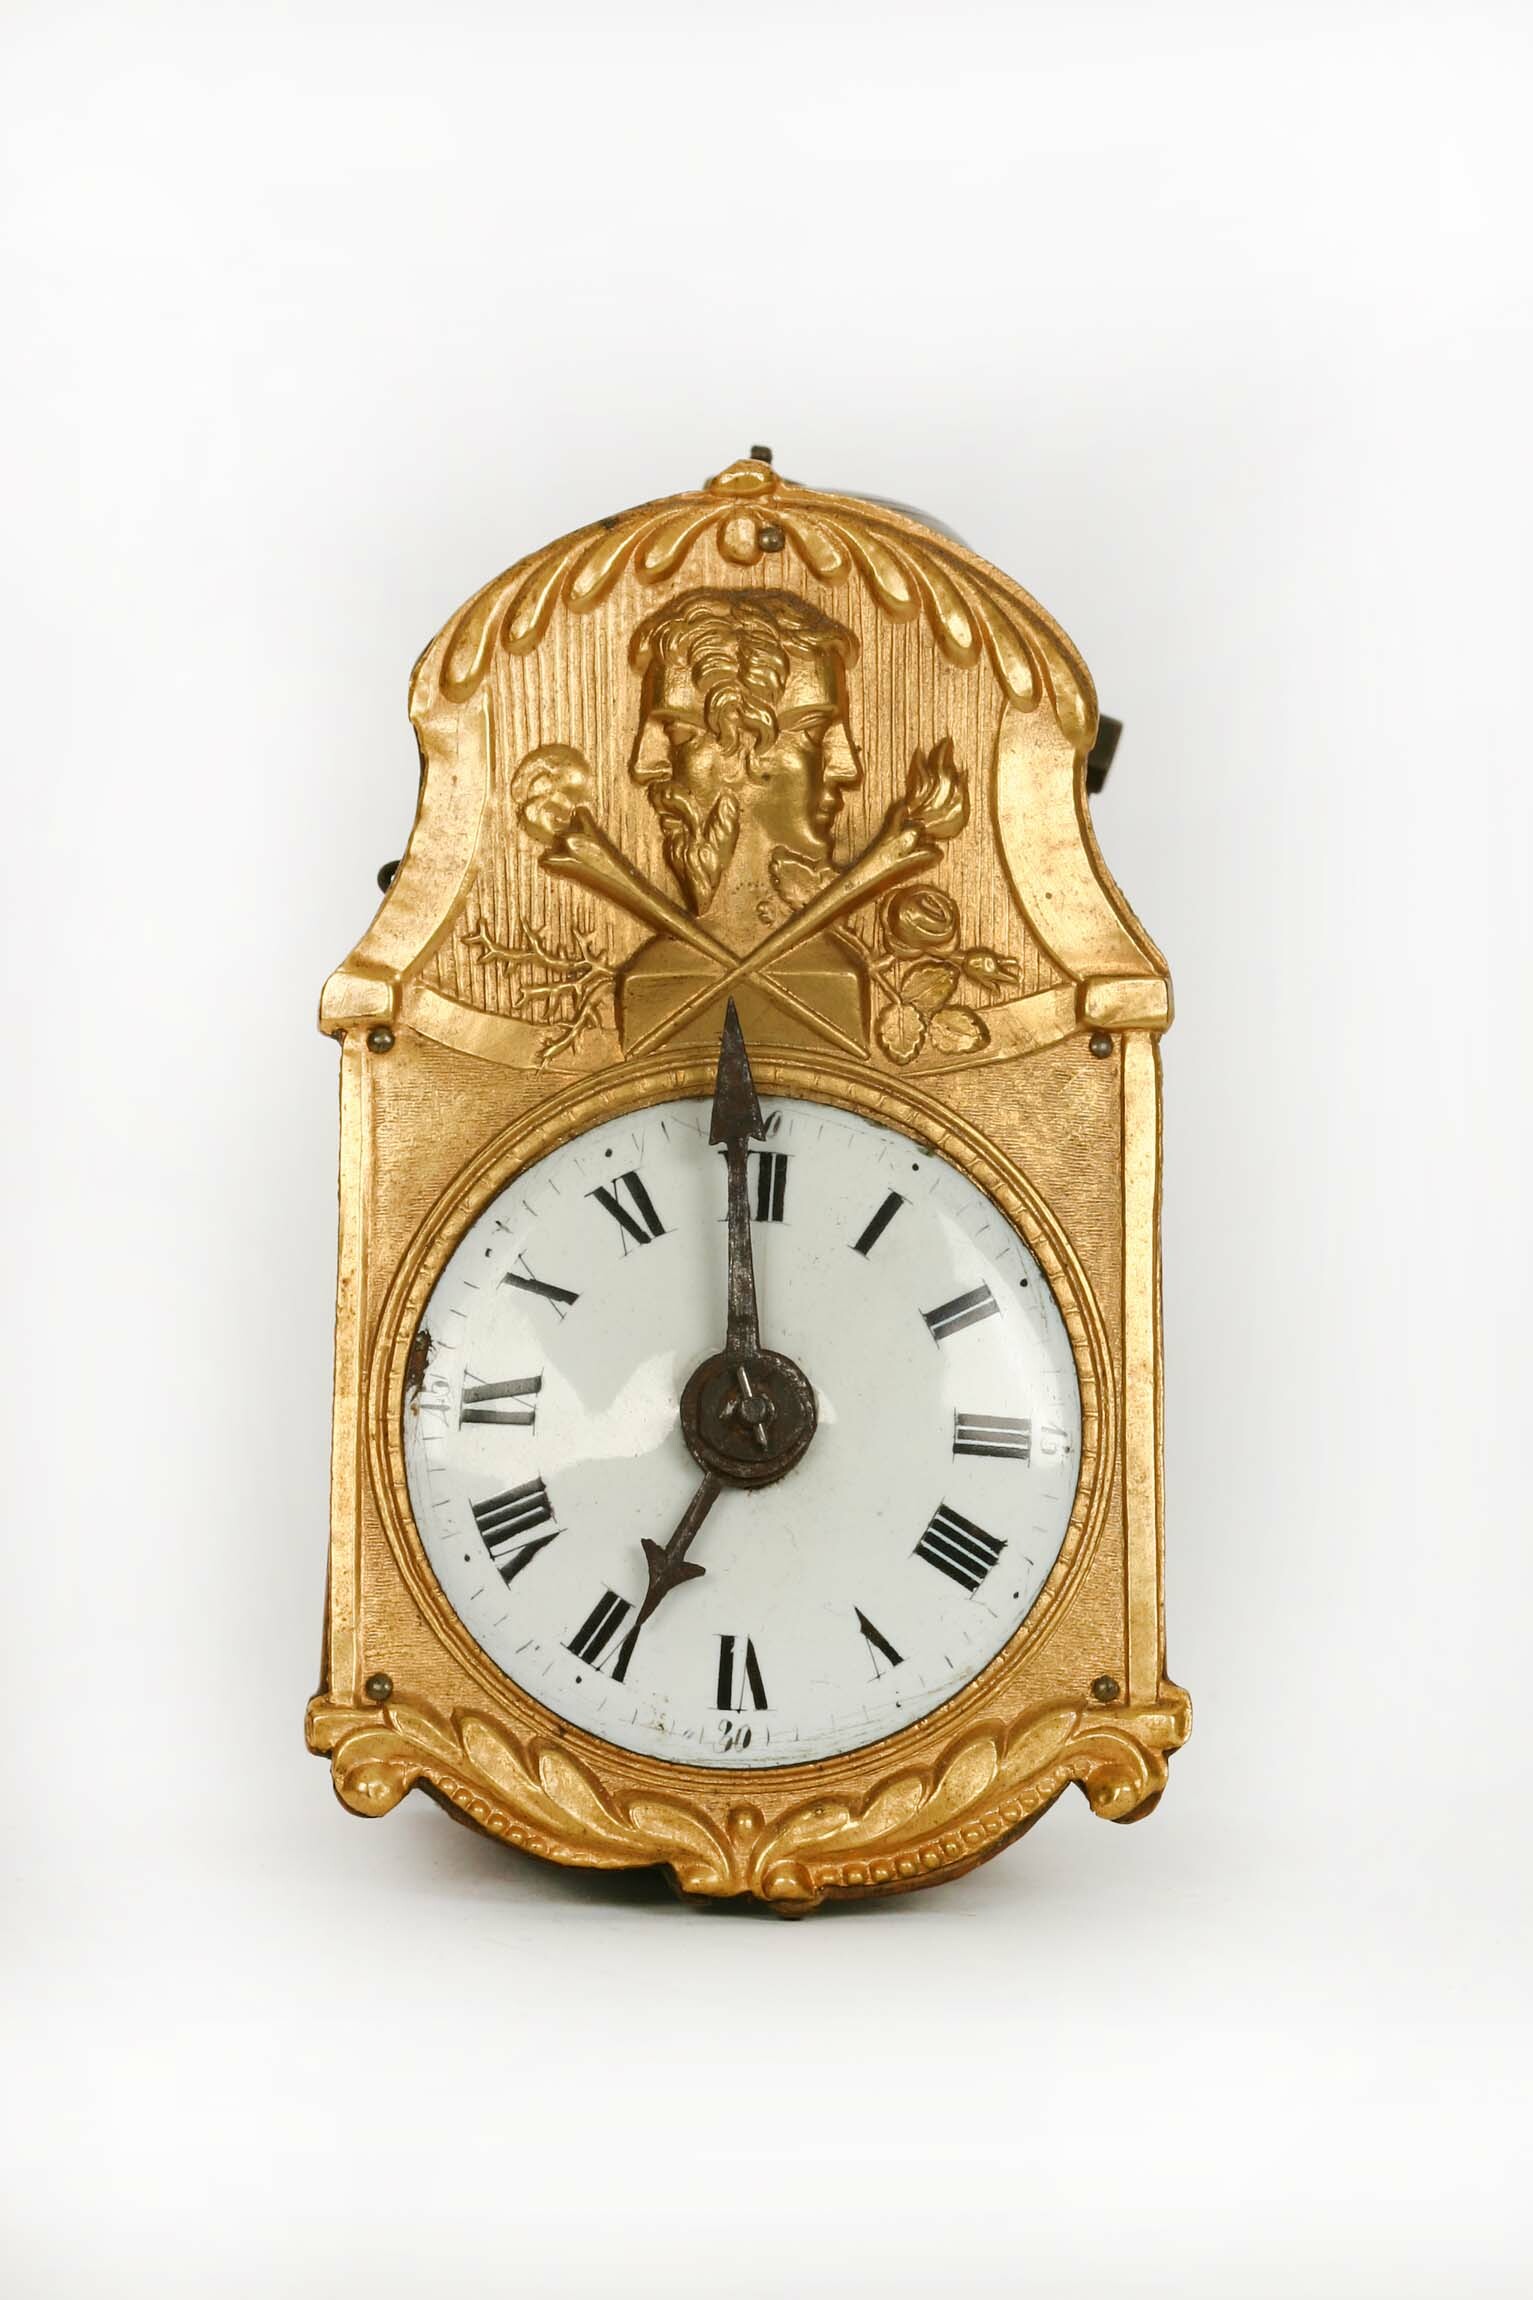 Jockeleuhr, Johan Kohler, Neustadt, um 1840 (Deutsches Uhrenmuseum CC BY-SA)